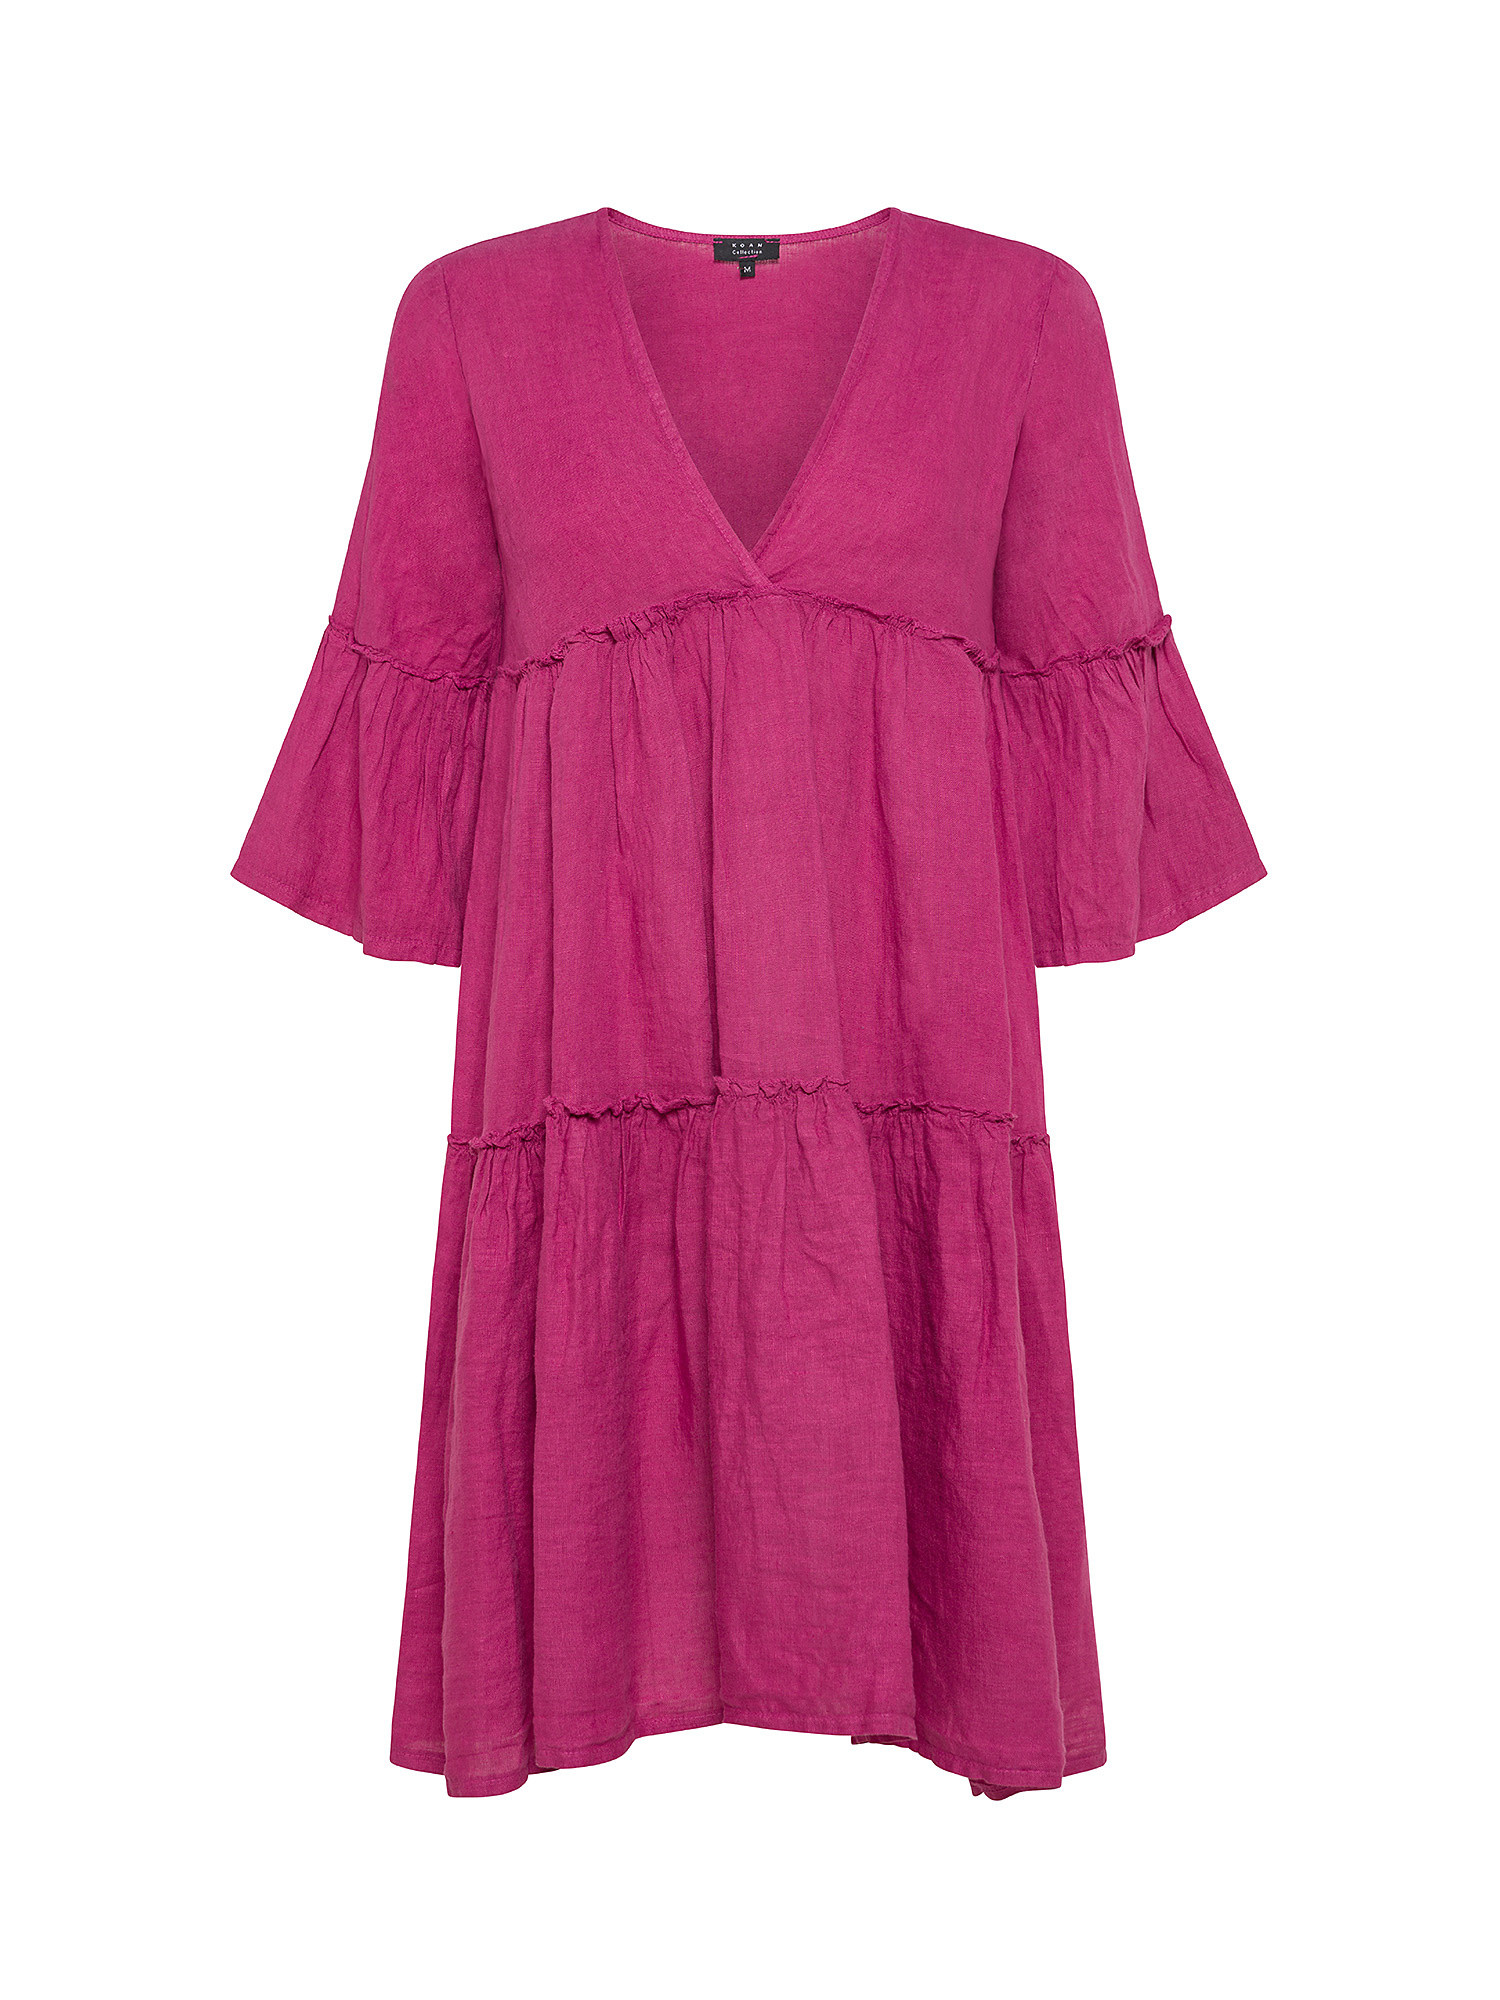 Koan - Linen dress with flounces, Pink, large image number 0